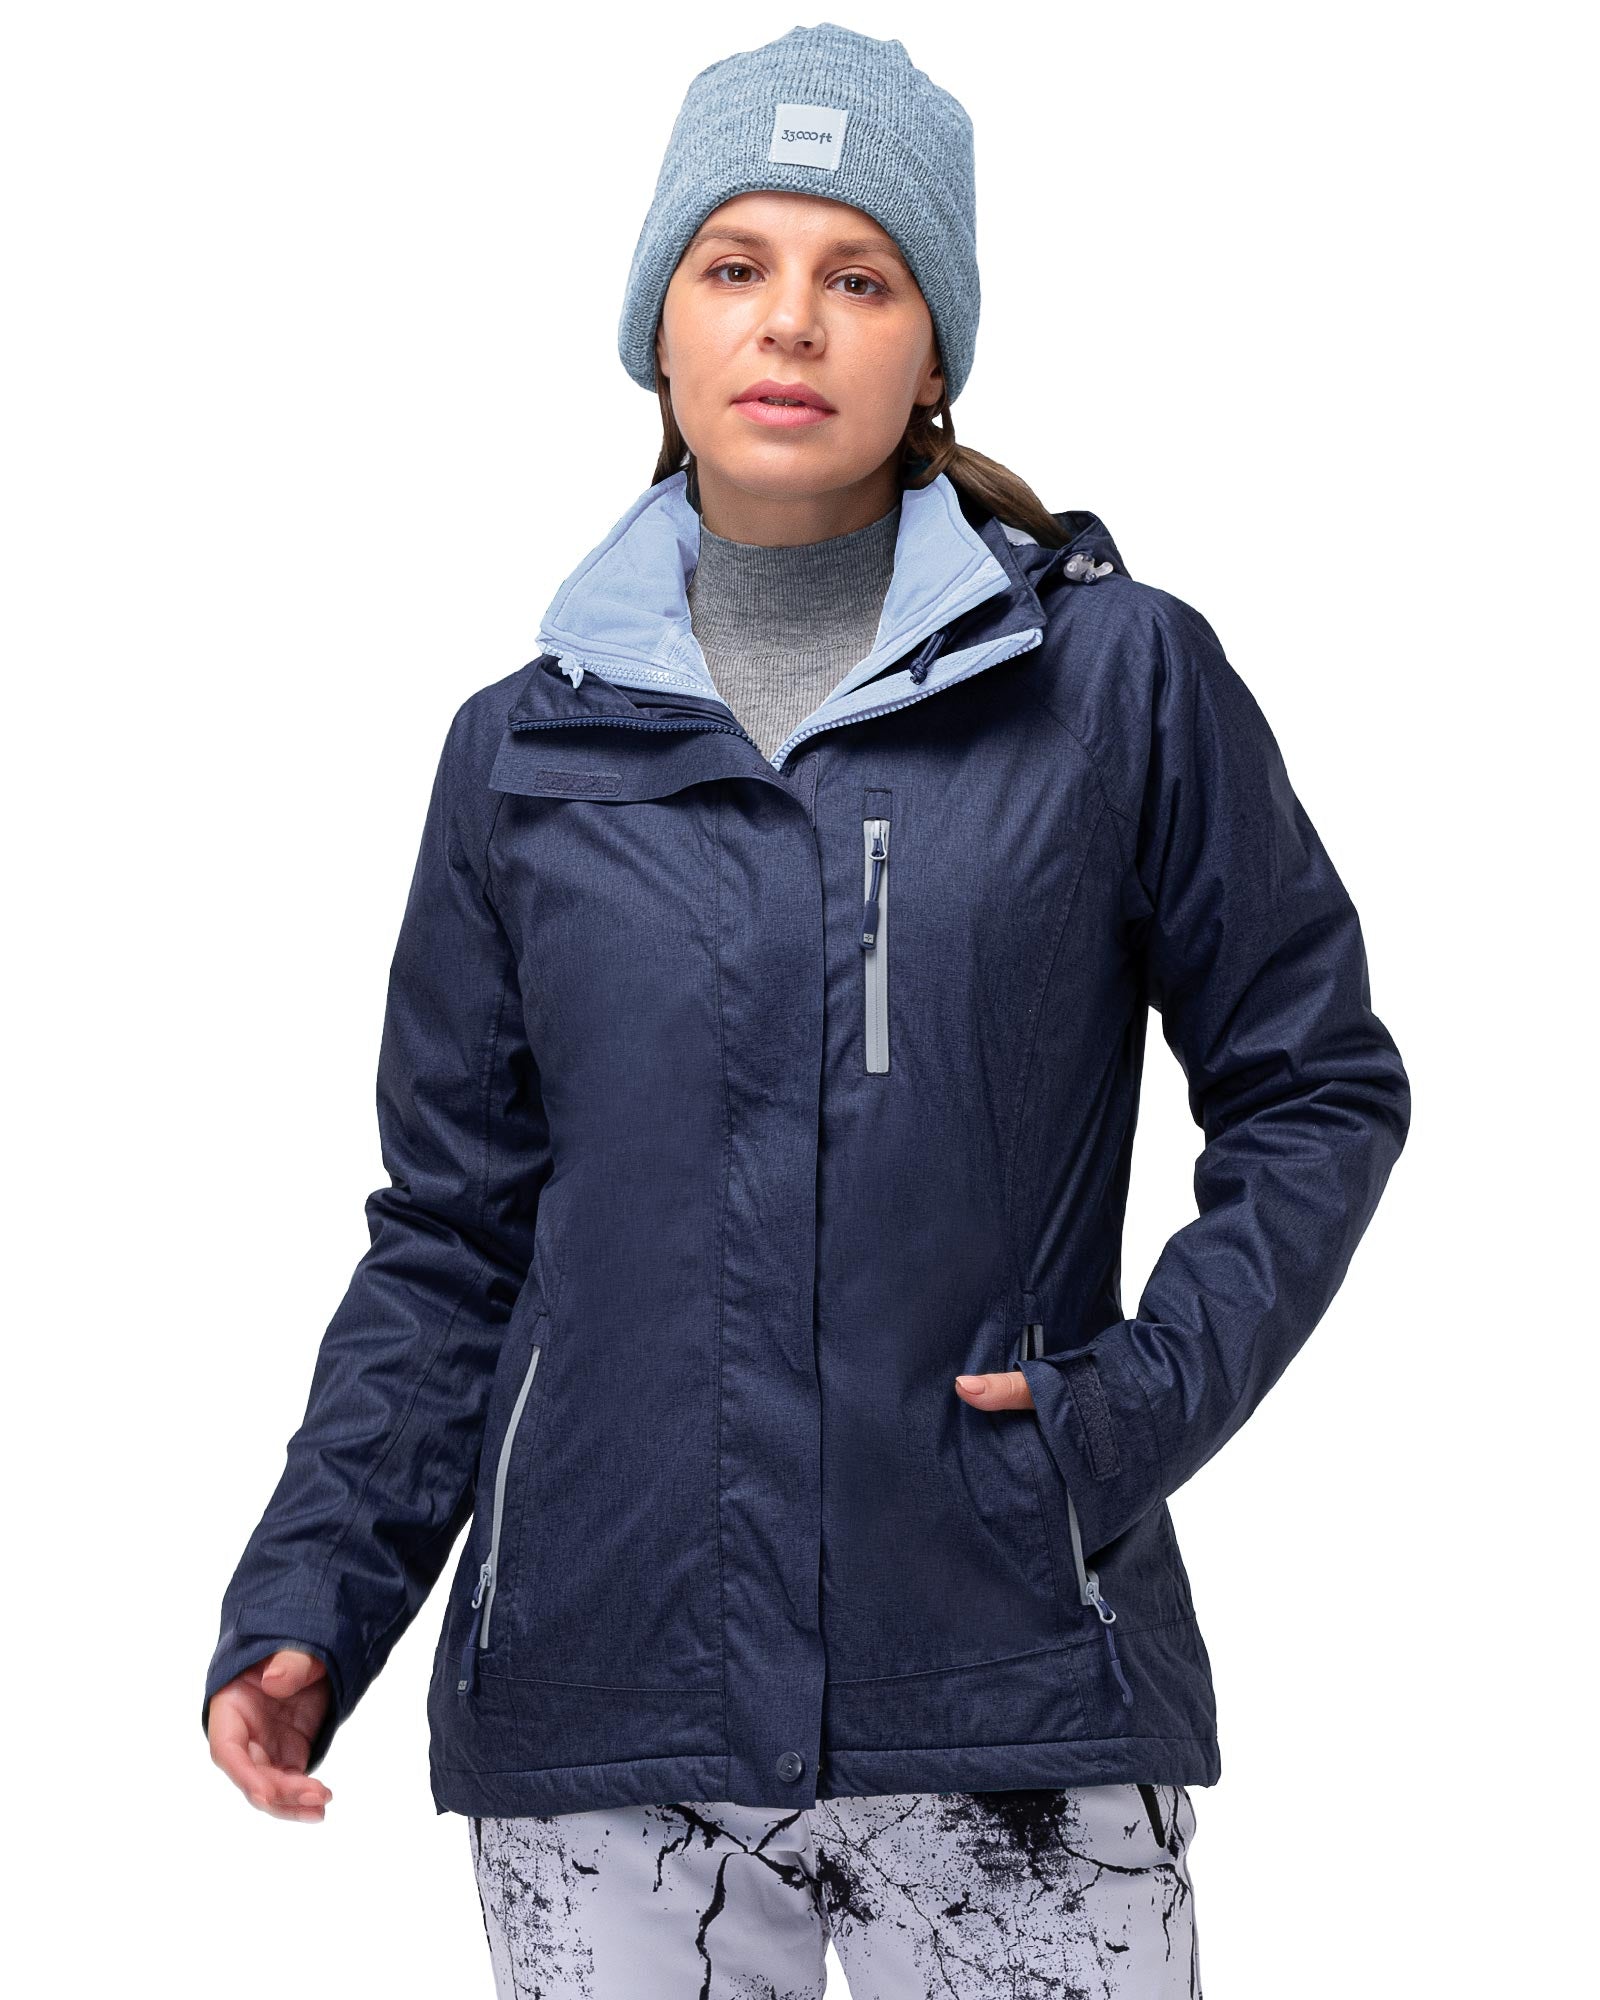 Women\'s 3 in 1 So Coat Hiking Ski Waterproof Hooded – Jacket 33,000ft Winter Rain